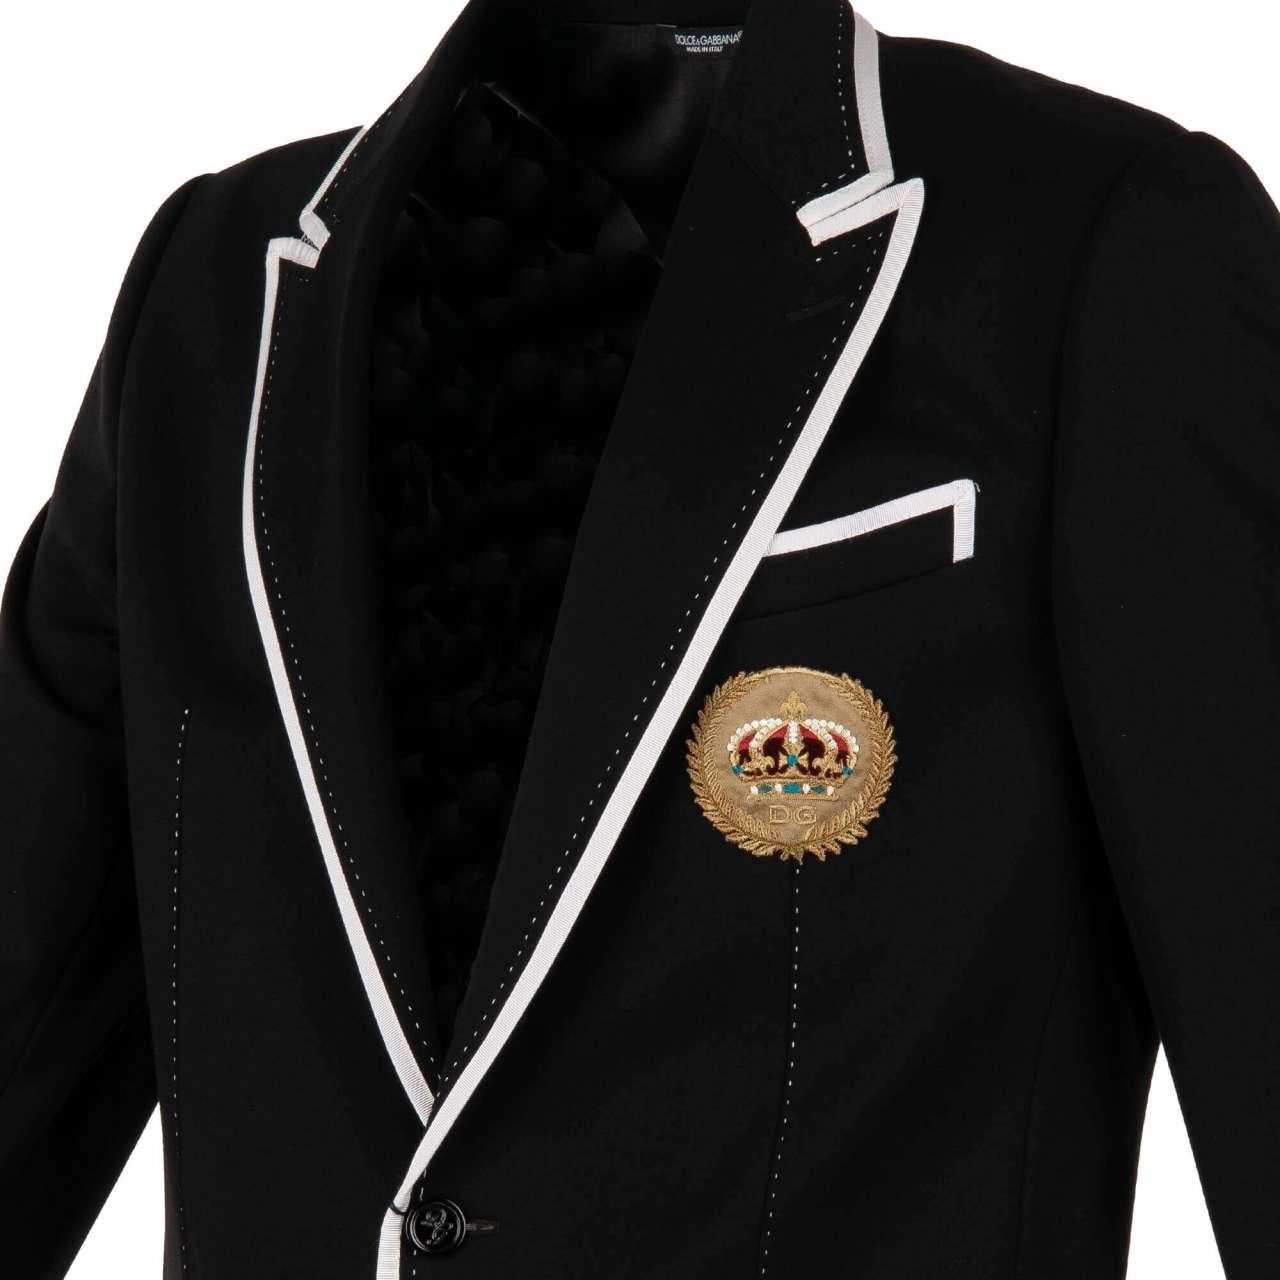 Dolce & Gabbana - DG Crown Embroidery Jersey Blazer Jacket Black 48 In Excellent Condition For Sale In Erkrath, DE